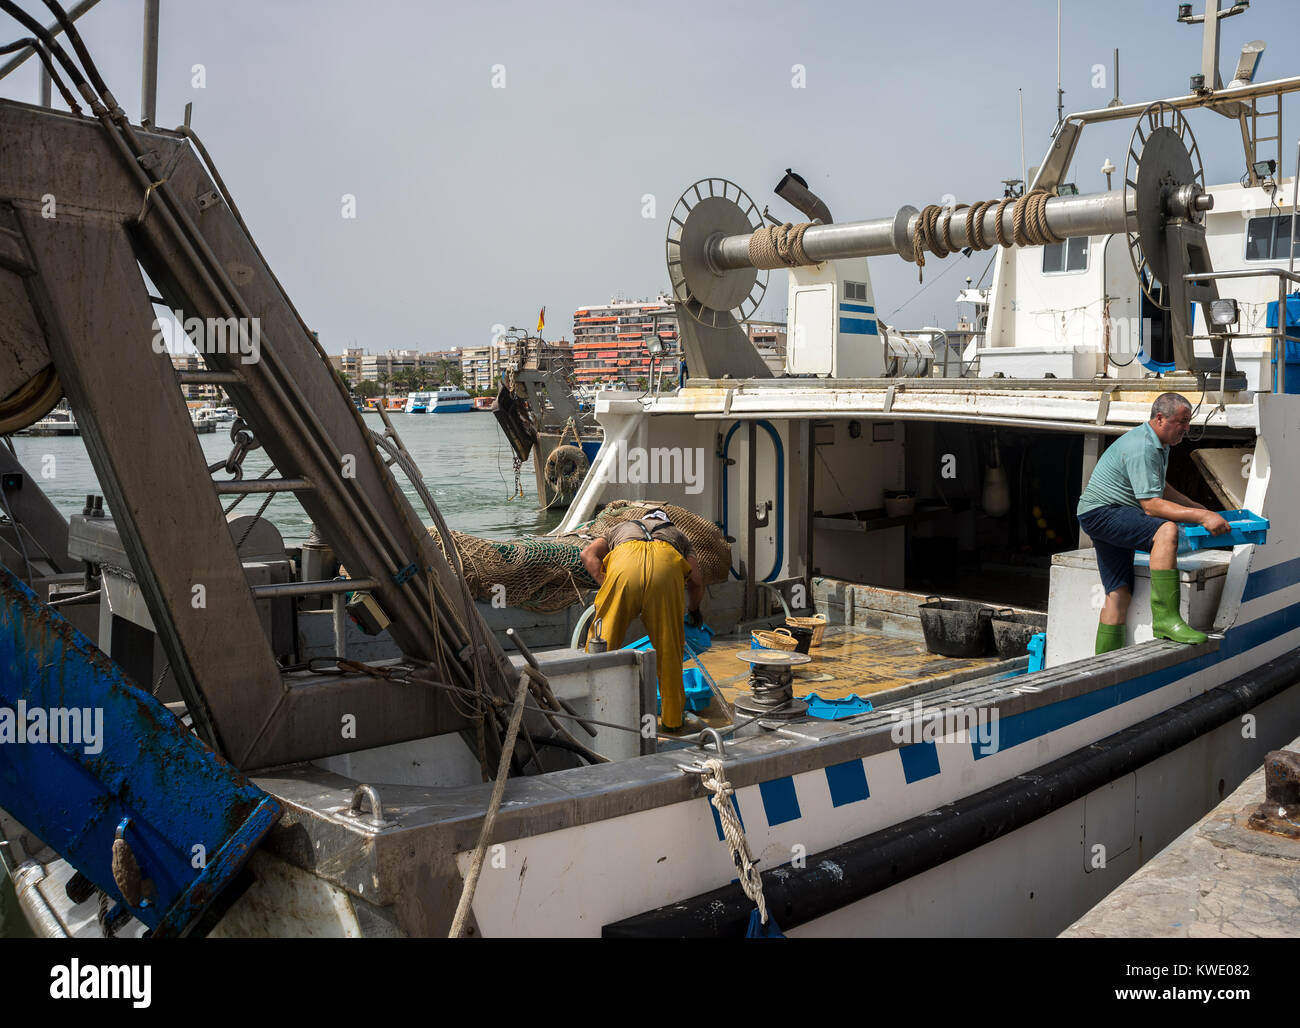 SANTA POLA – JULY 21, 2016: Fishing boats unloading fish in the port of Santa Pola, Alicante, Spain, on July 21, 2016 Stock Photo